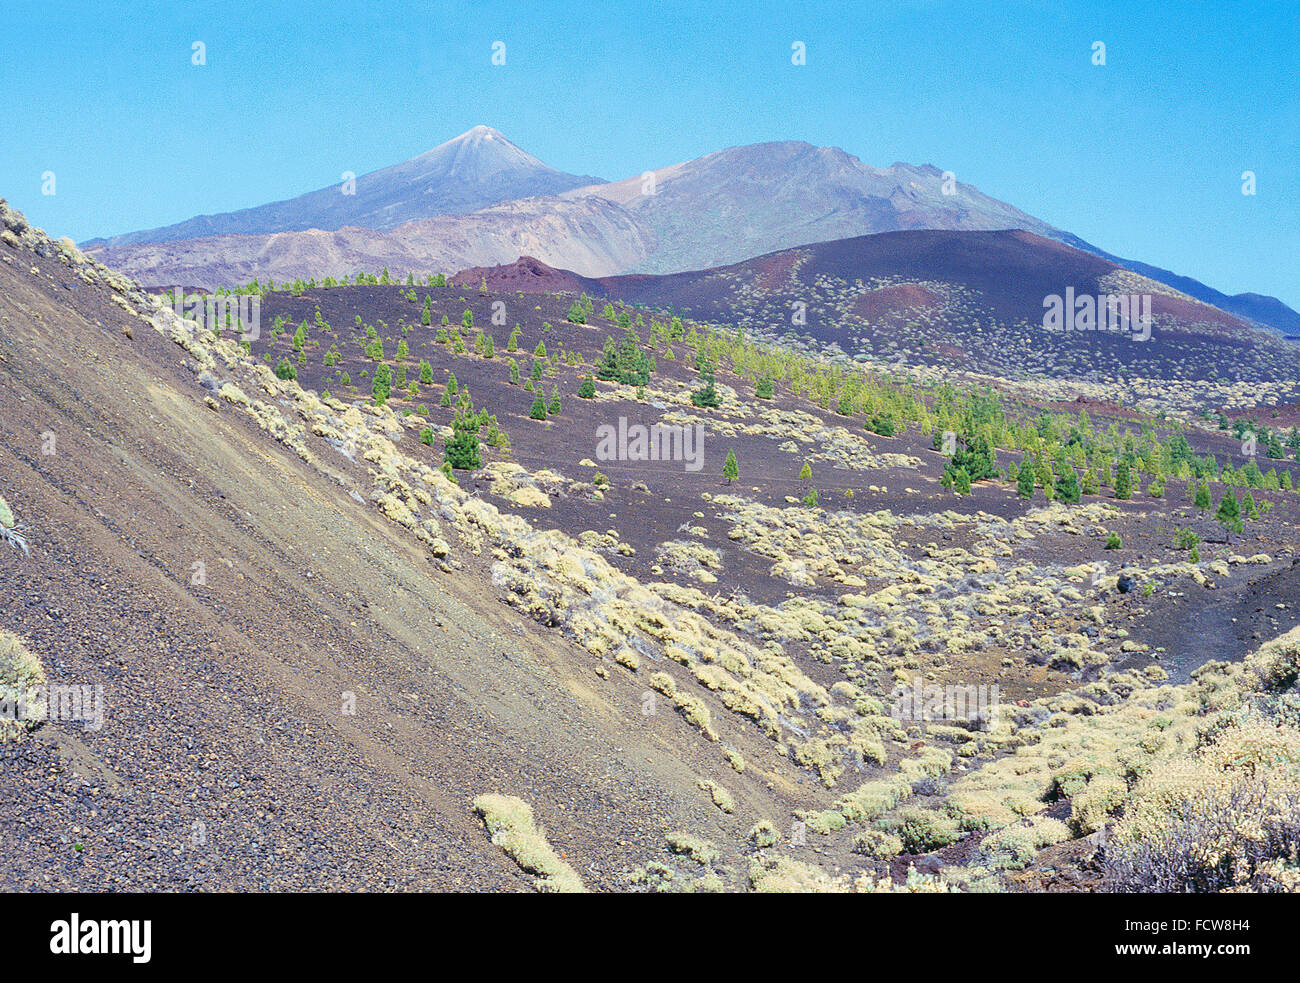 Teide peak and Pico Viejo crater. Teide National Park, Tenerife island, Canary Islands, Spain. Stock Photo